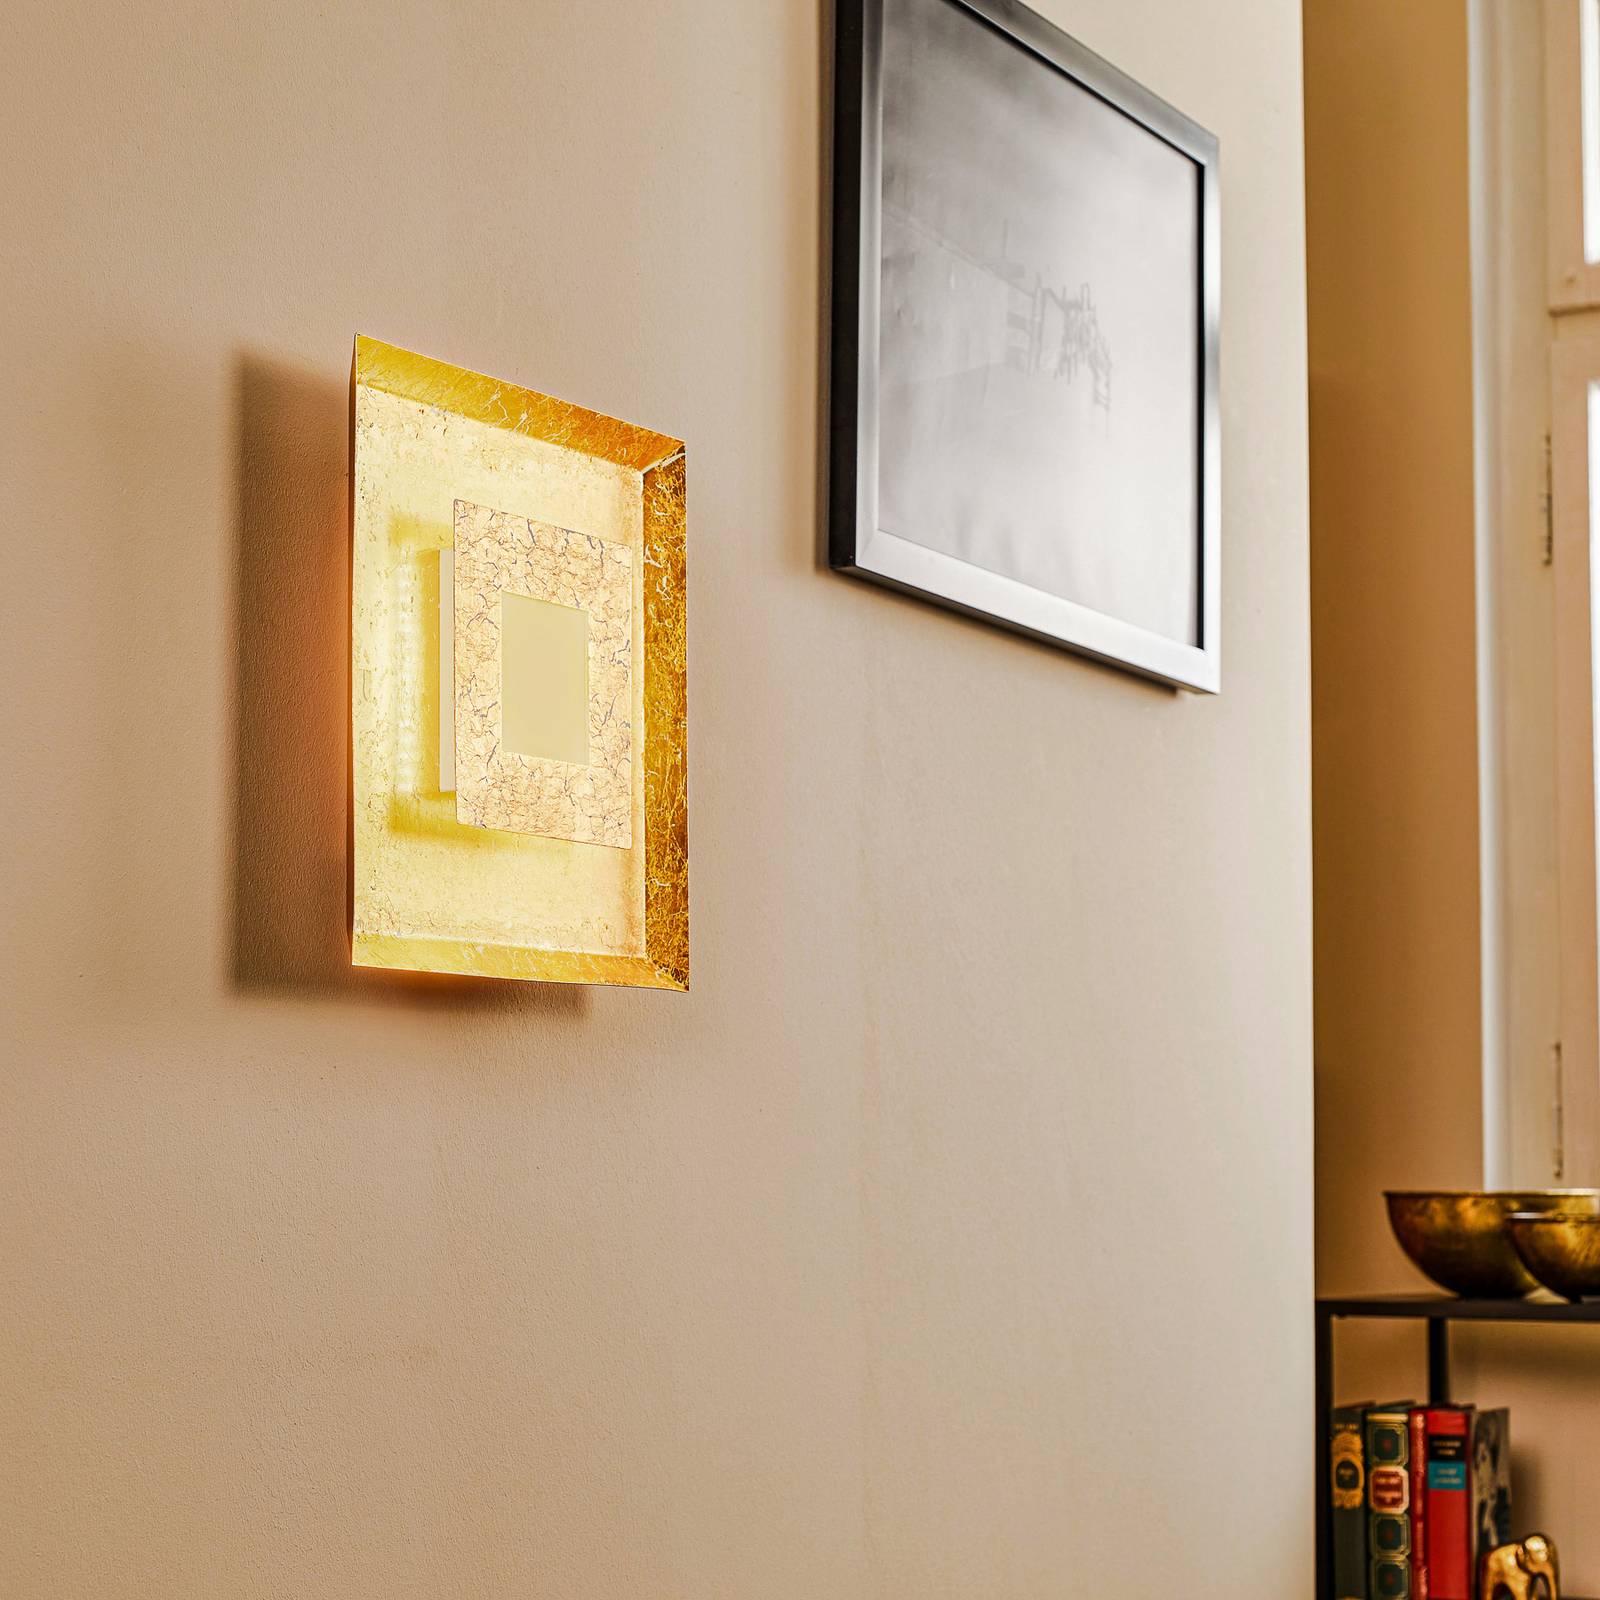 Eco-light led fali lámpa window, 32x32 cm, arany színű